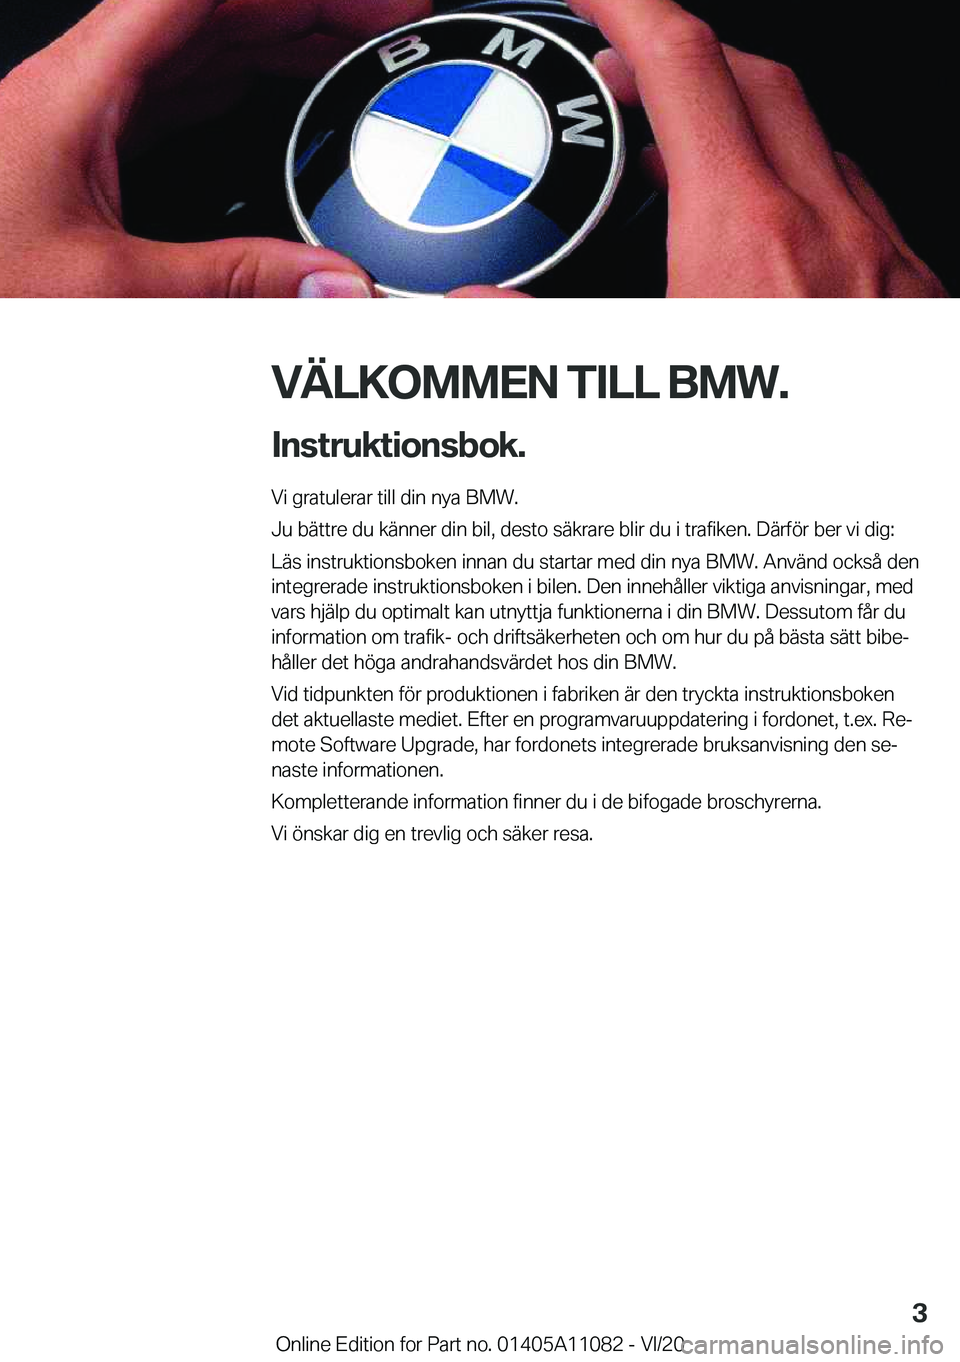 BMW 7 SERIES 2021  InstruktionsbÖcker (in Swedish) �V�Ä�L�K�O�M�M�E�N��T�I�L�L��B�M�W�.�I�n�s�t�r�u�k�t�i�o�n�s�b�o�k�.
�V�i��g�r�a�t�u�l�e�r�a�r��t�i�l�l��d�i�n��n�y�a��B�M�W�.
�J�u��b�ä�t�t�r�e��d�u��k�ä�n�n�e�r��d�i�n��b�i�l�,��d�e�